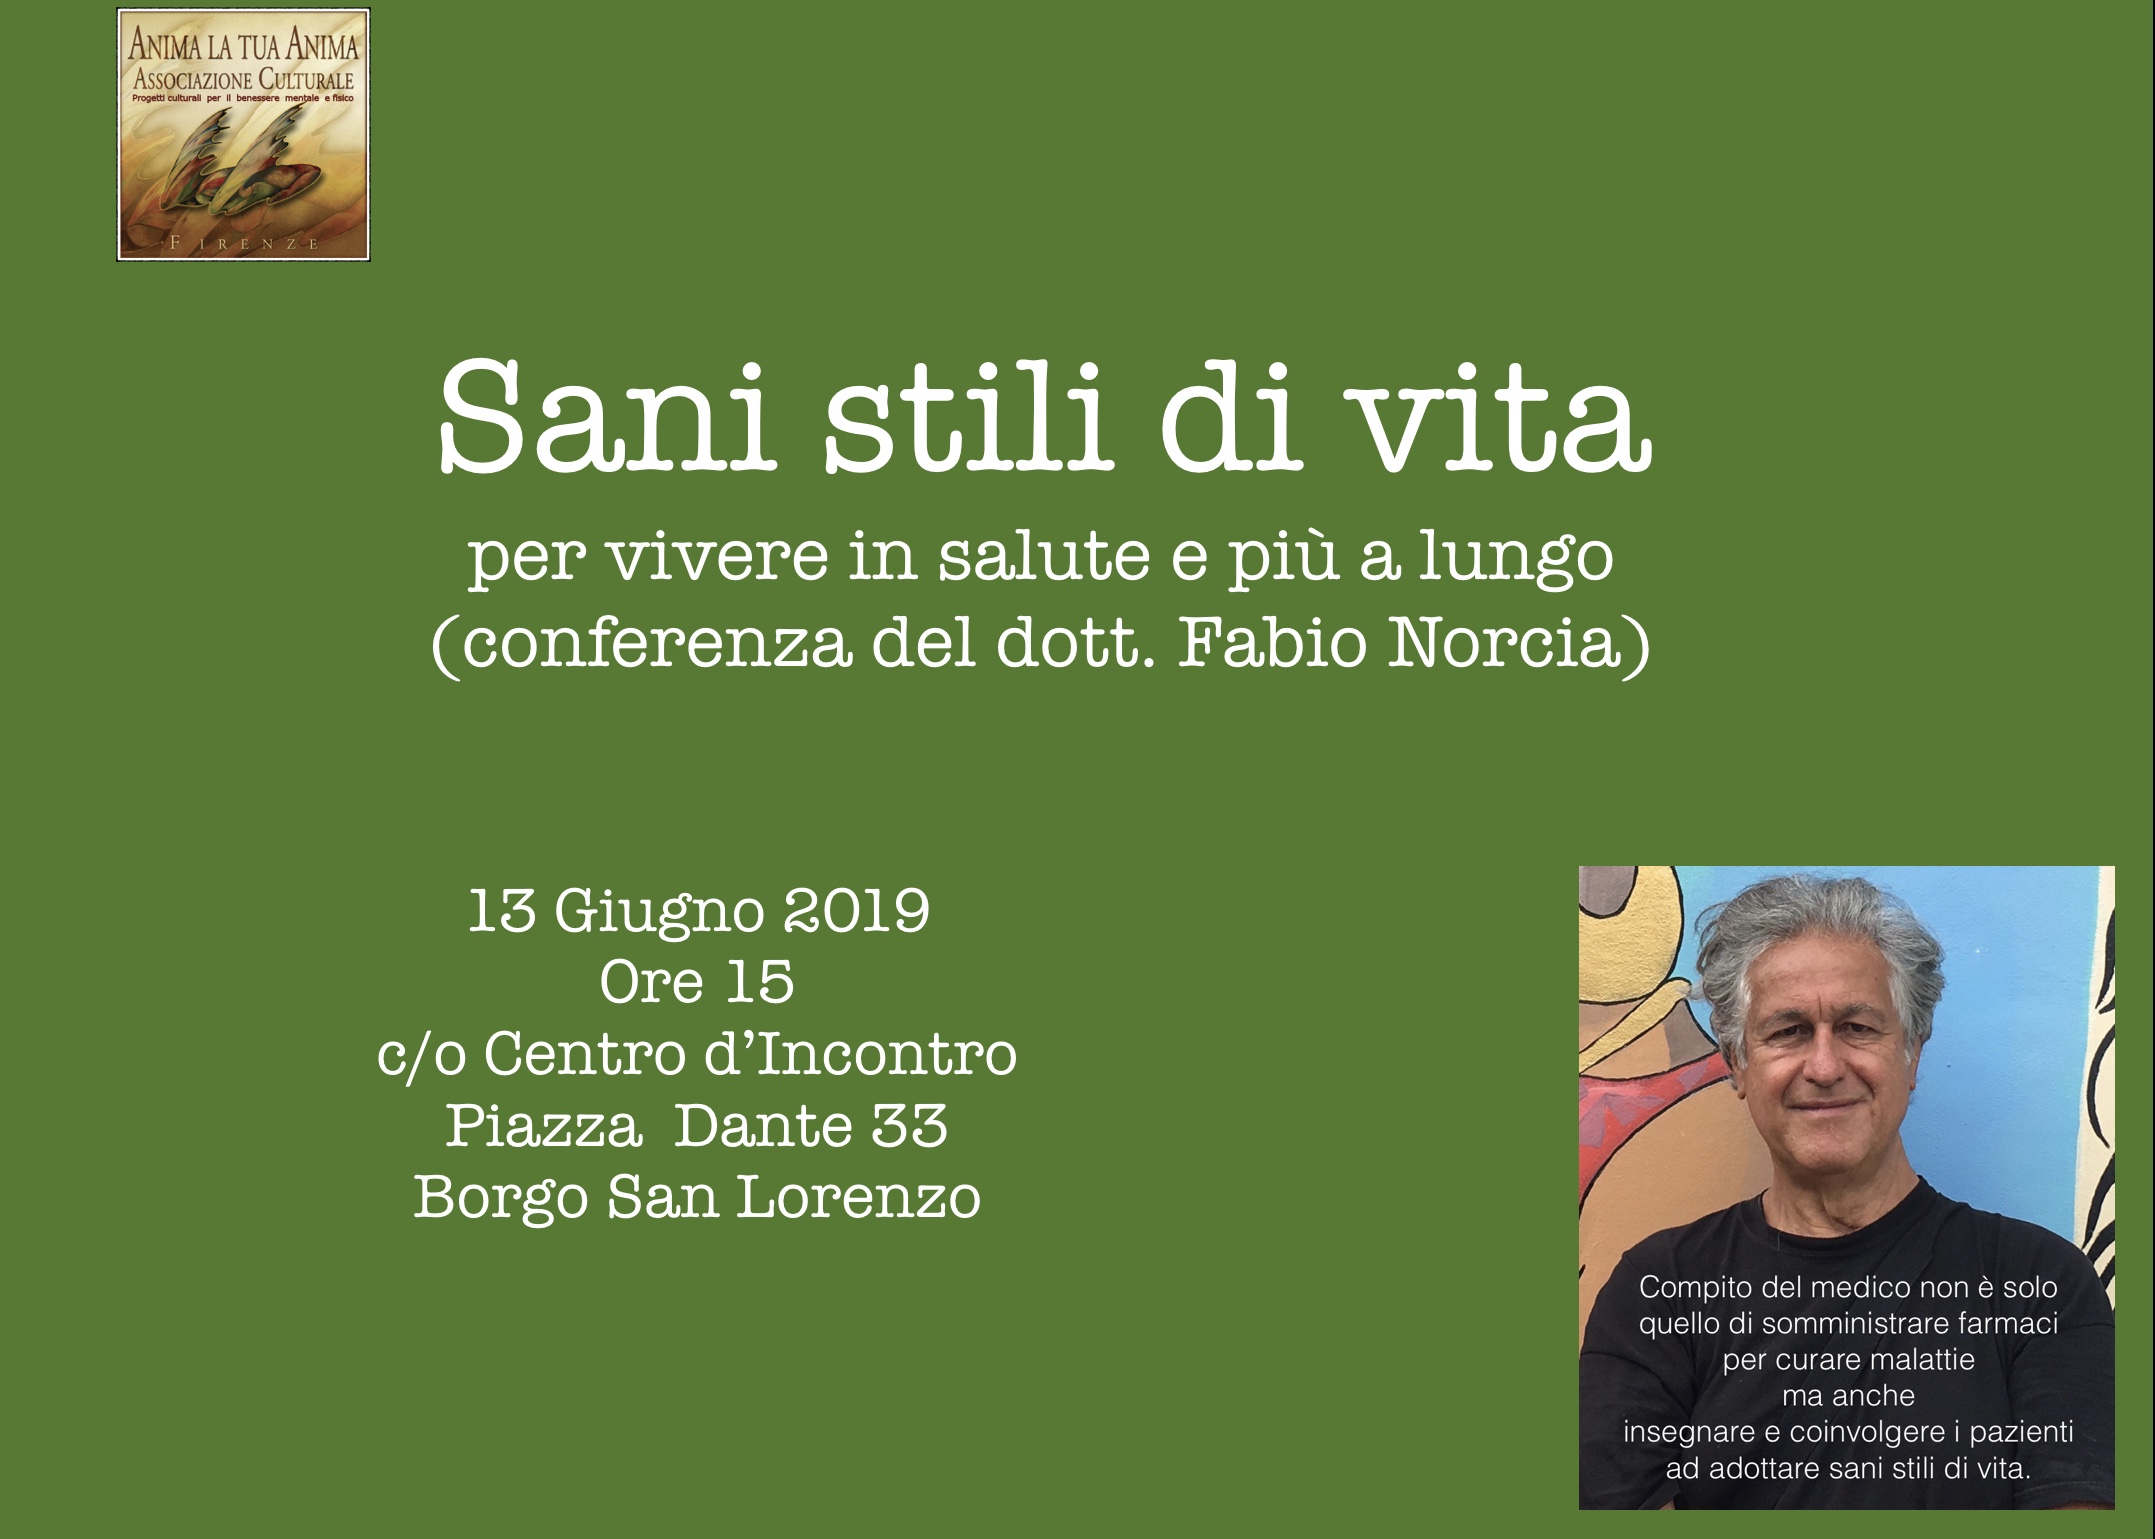 Sani stili di vita - 13/06/2019 - Borgo San Lorenzo - Fabio Norcia